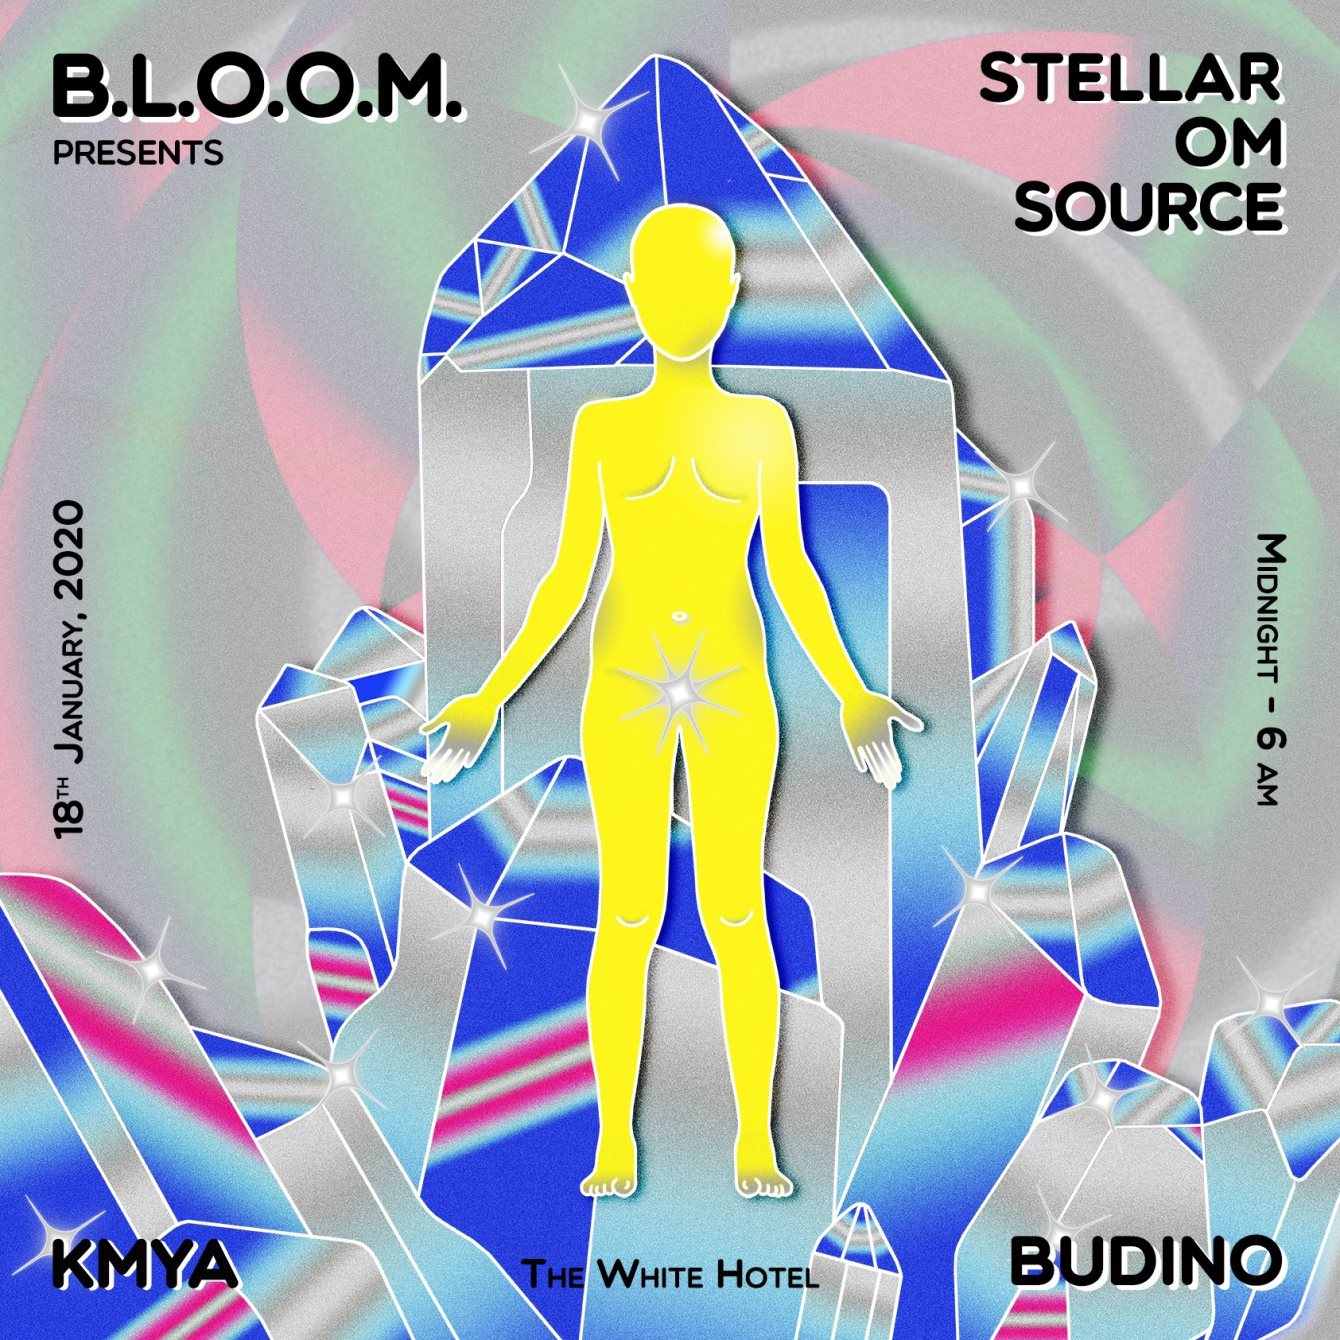 B.L.O.O.M. presents: Stellar OM Source & Budino - Flyer front